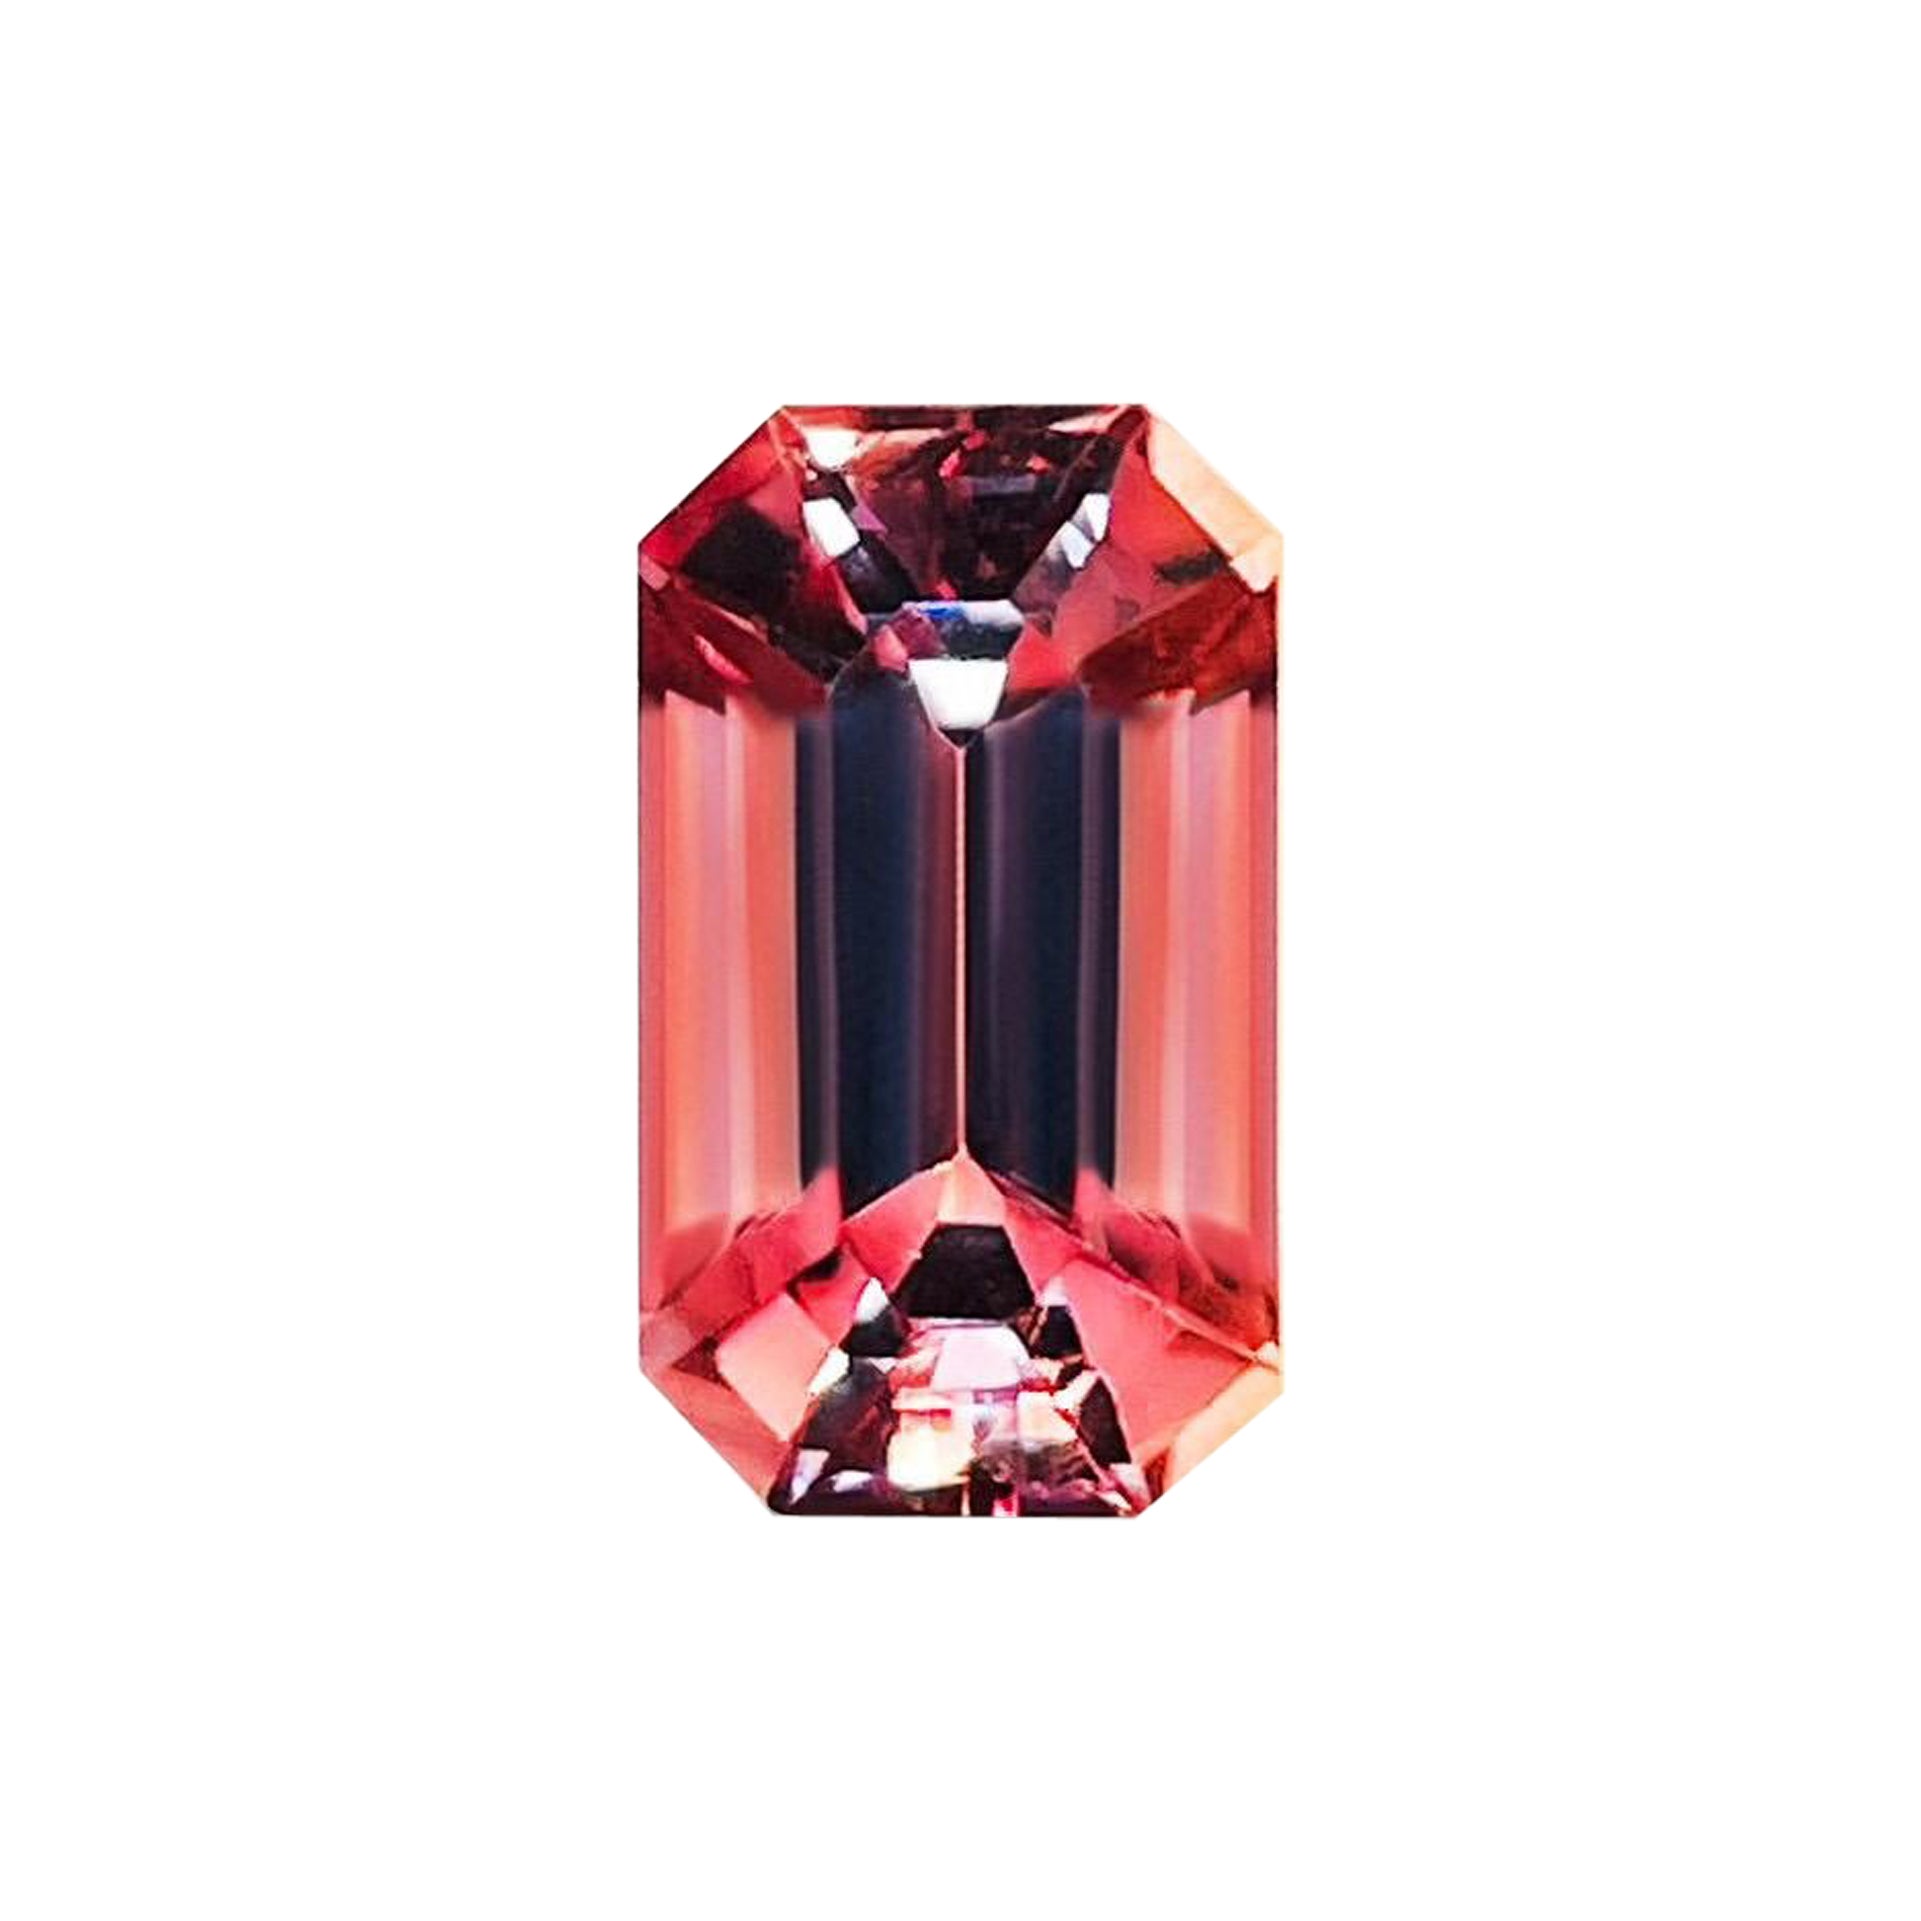 Pink diaspore zultanite color change gemstone pink change to red 3.21ct